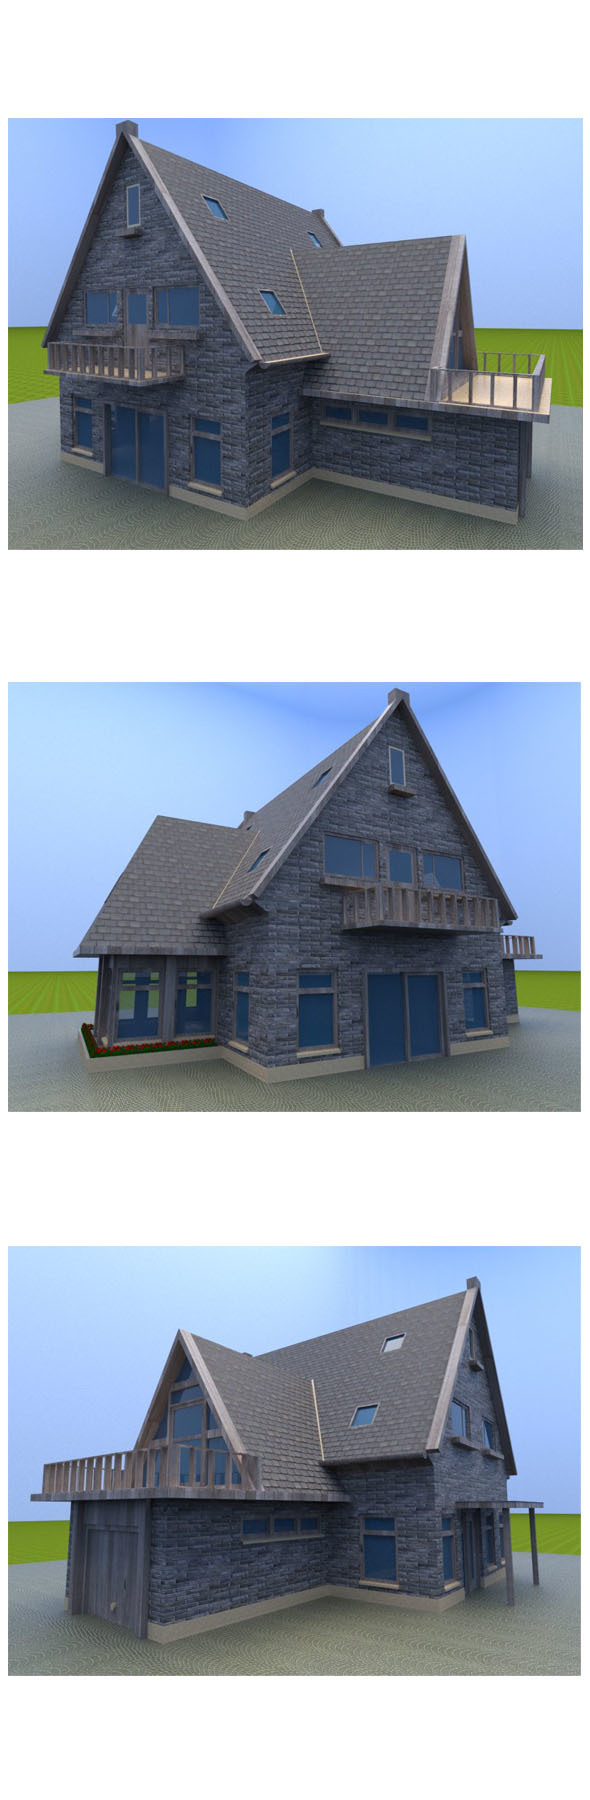 Old house design - 3Docean 13504847